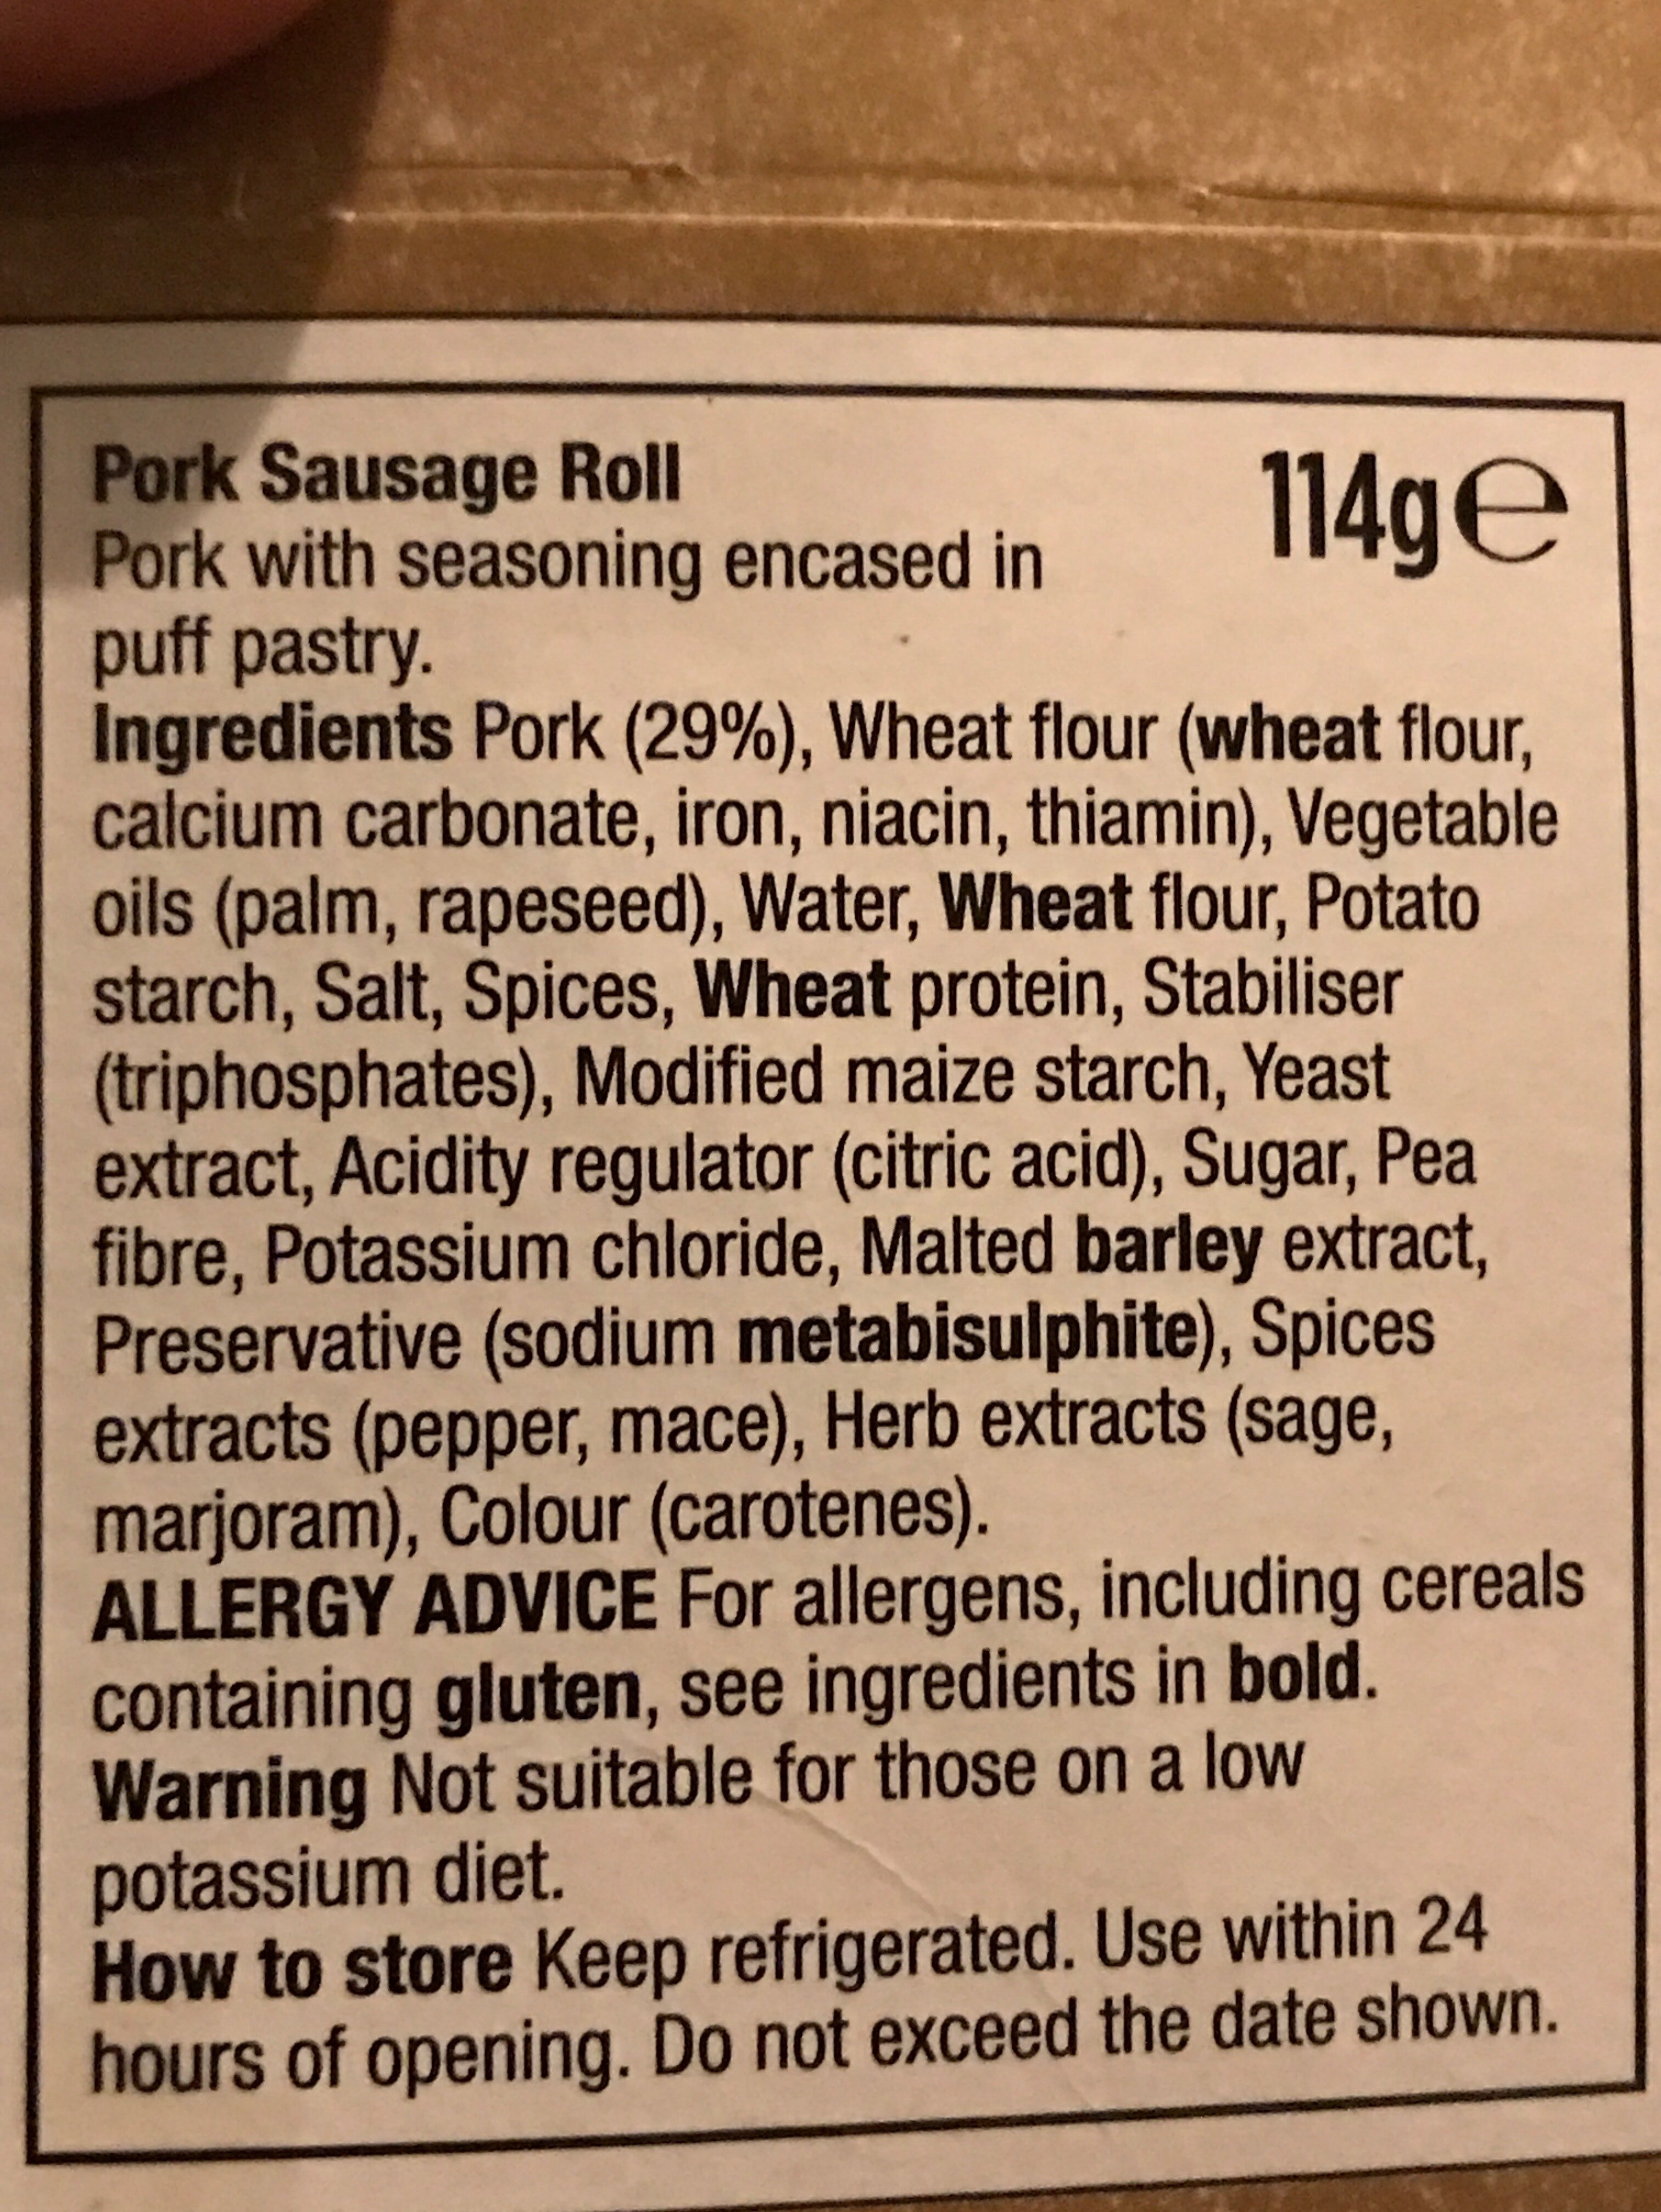 Pork sausage roll - Ingredients